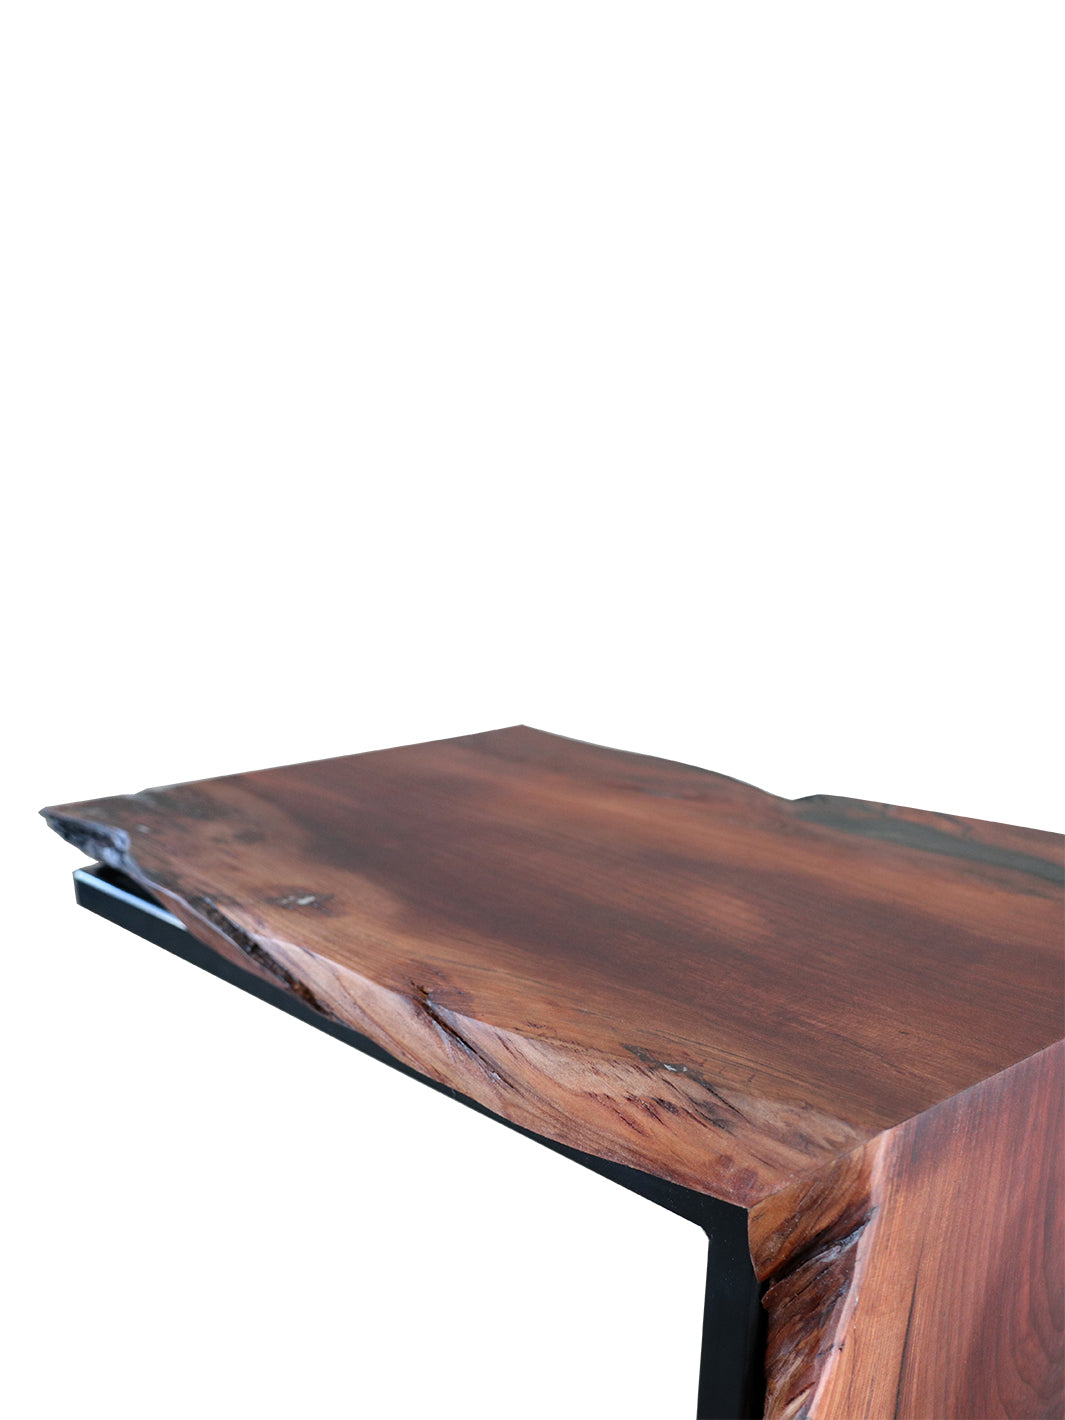 Sinker Redwood Waterfall Wood Laptop C Table Earthly Comfort Side Tables 1258-1